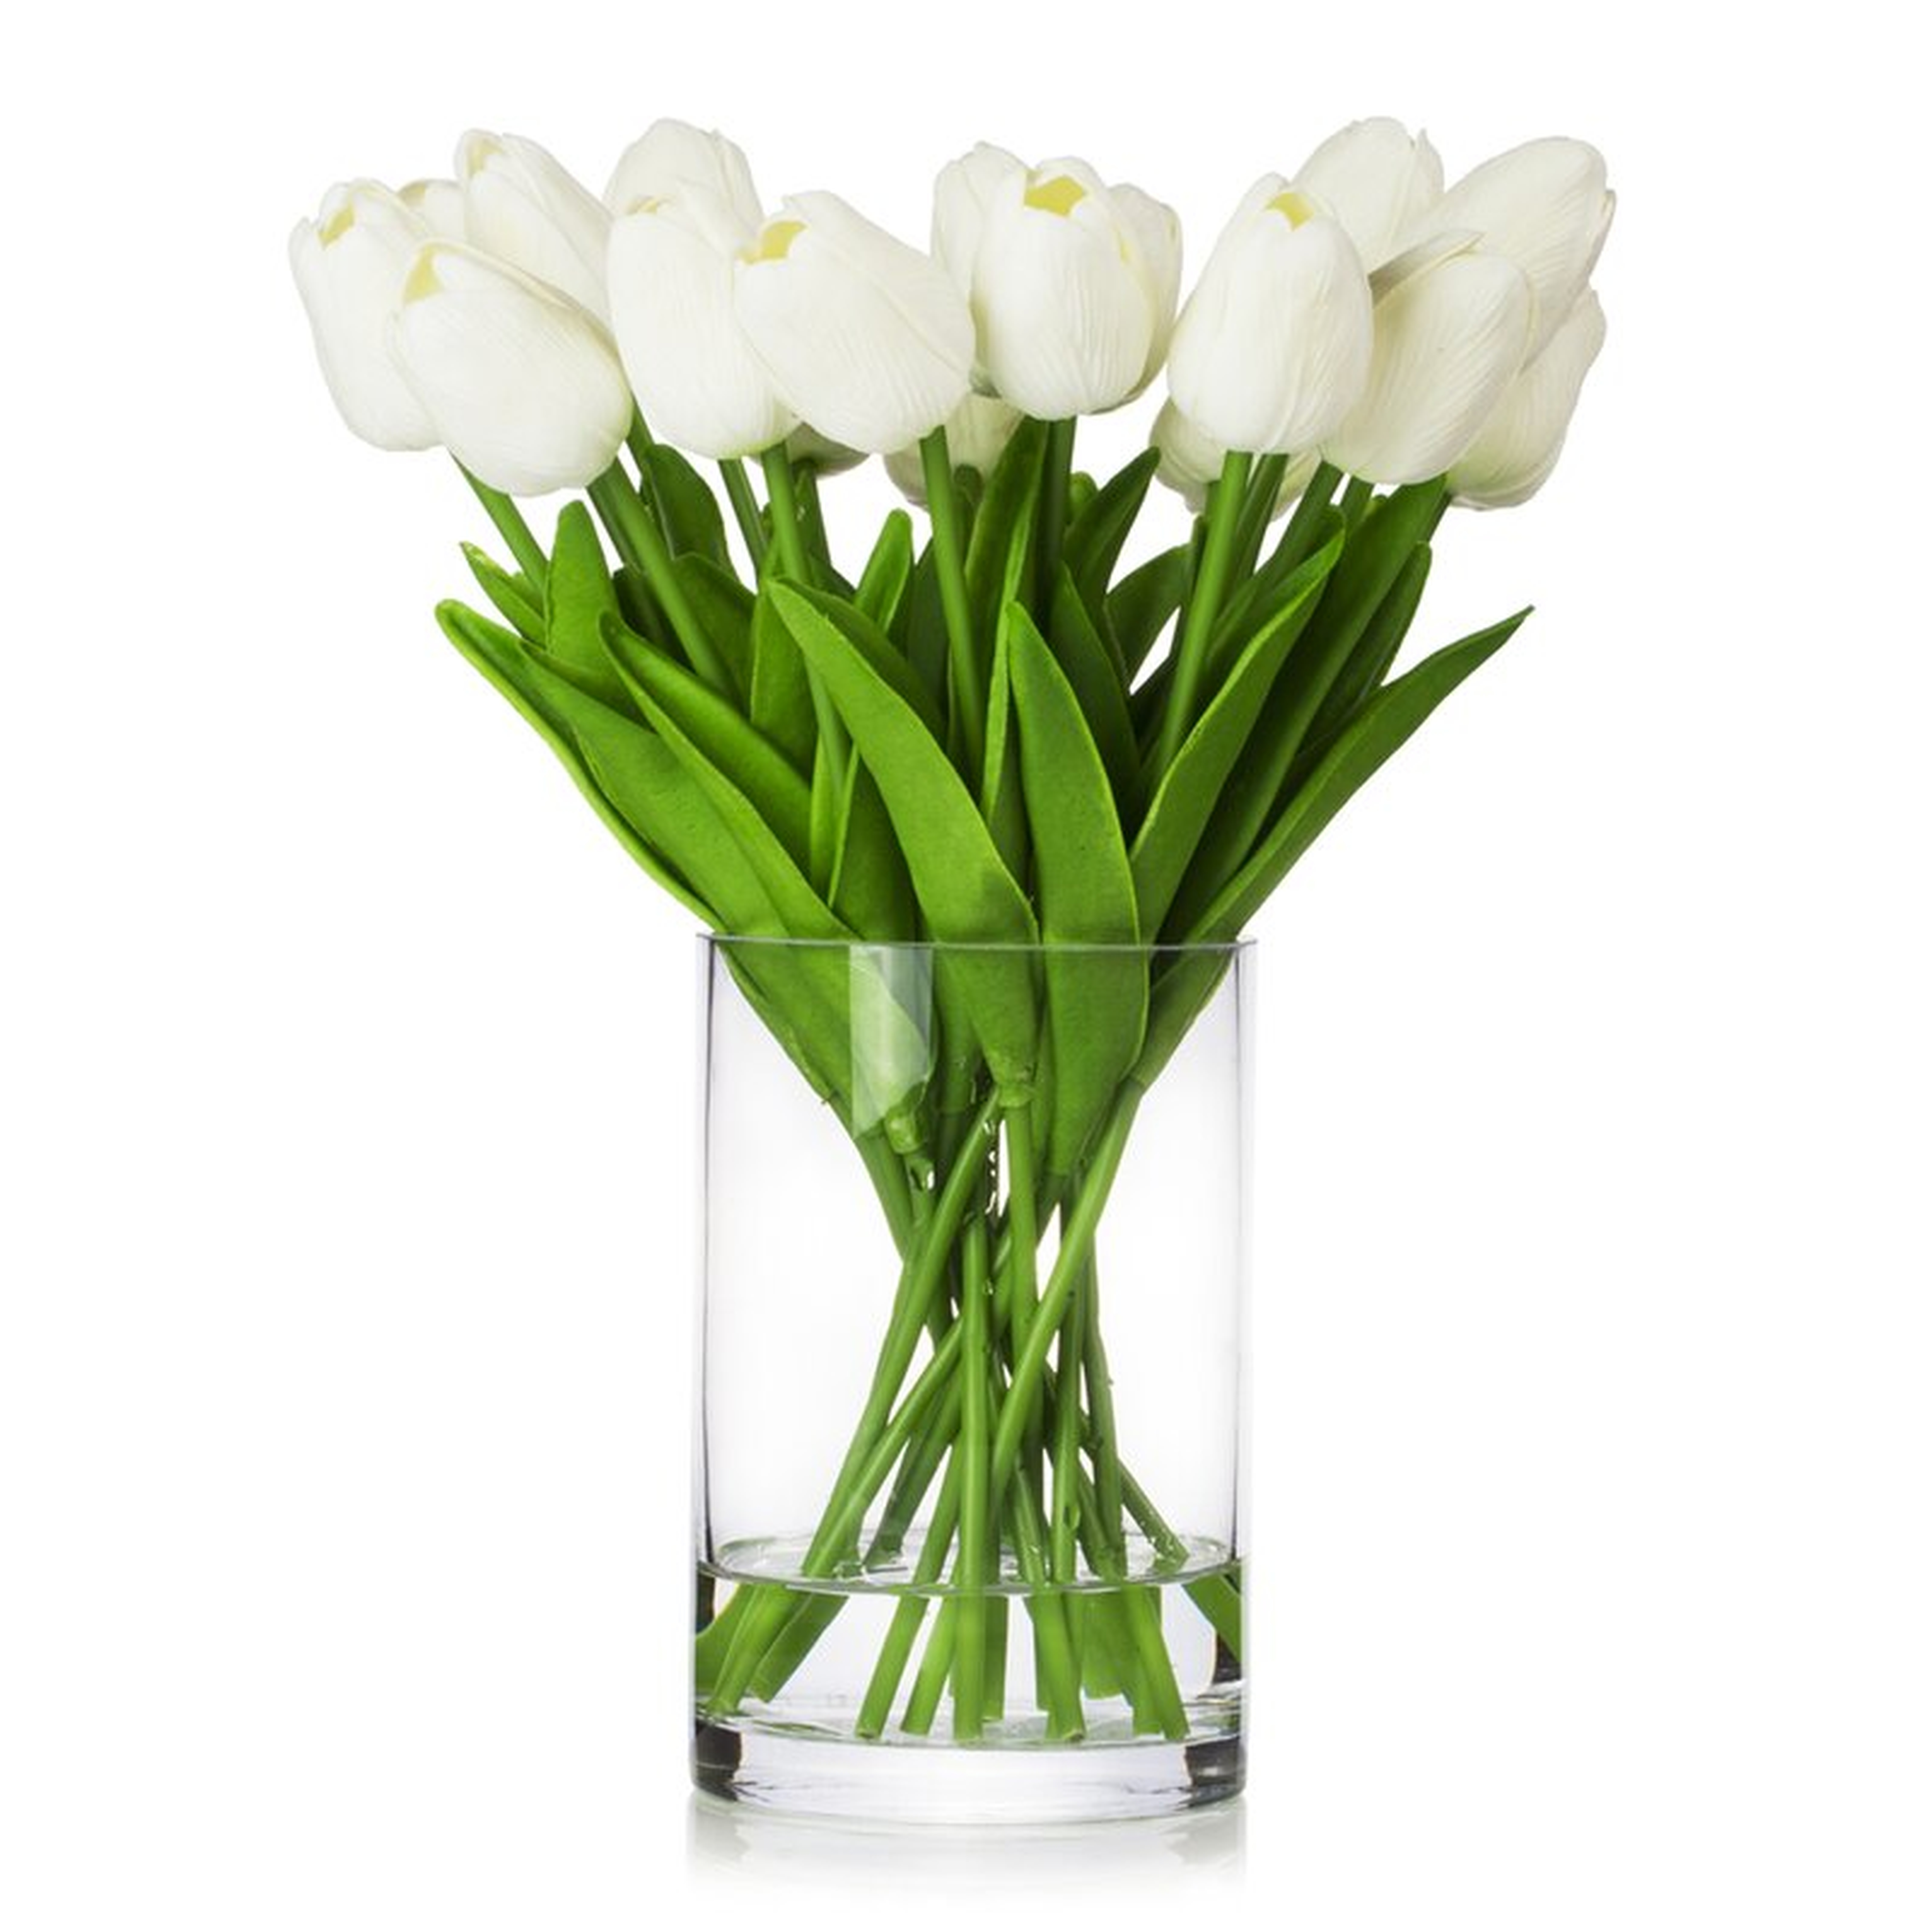 Real Touch Flower Tulips Centerpiece in Vase, White - Wayfair